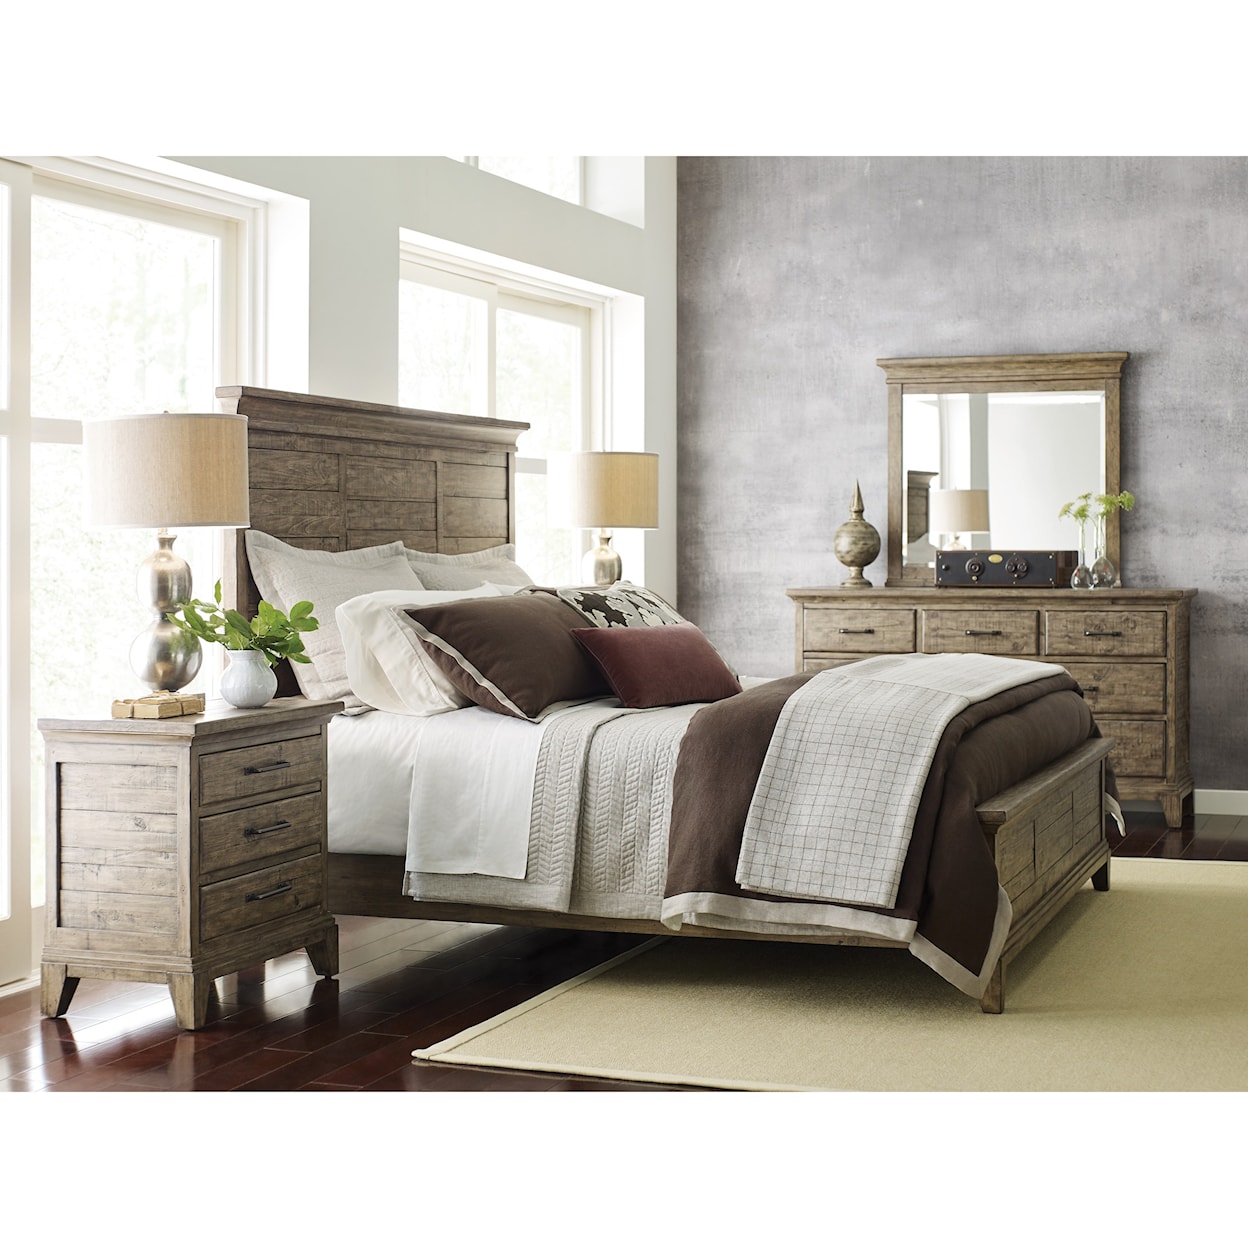 Kincaid Furniture Plank Road King Bedroom Group